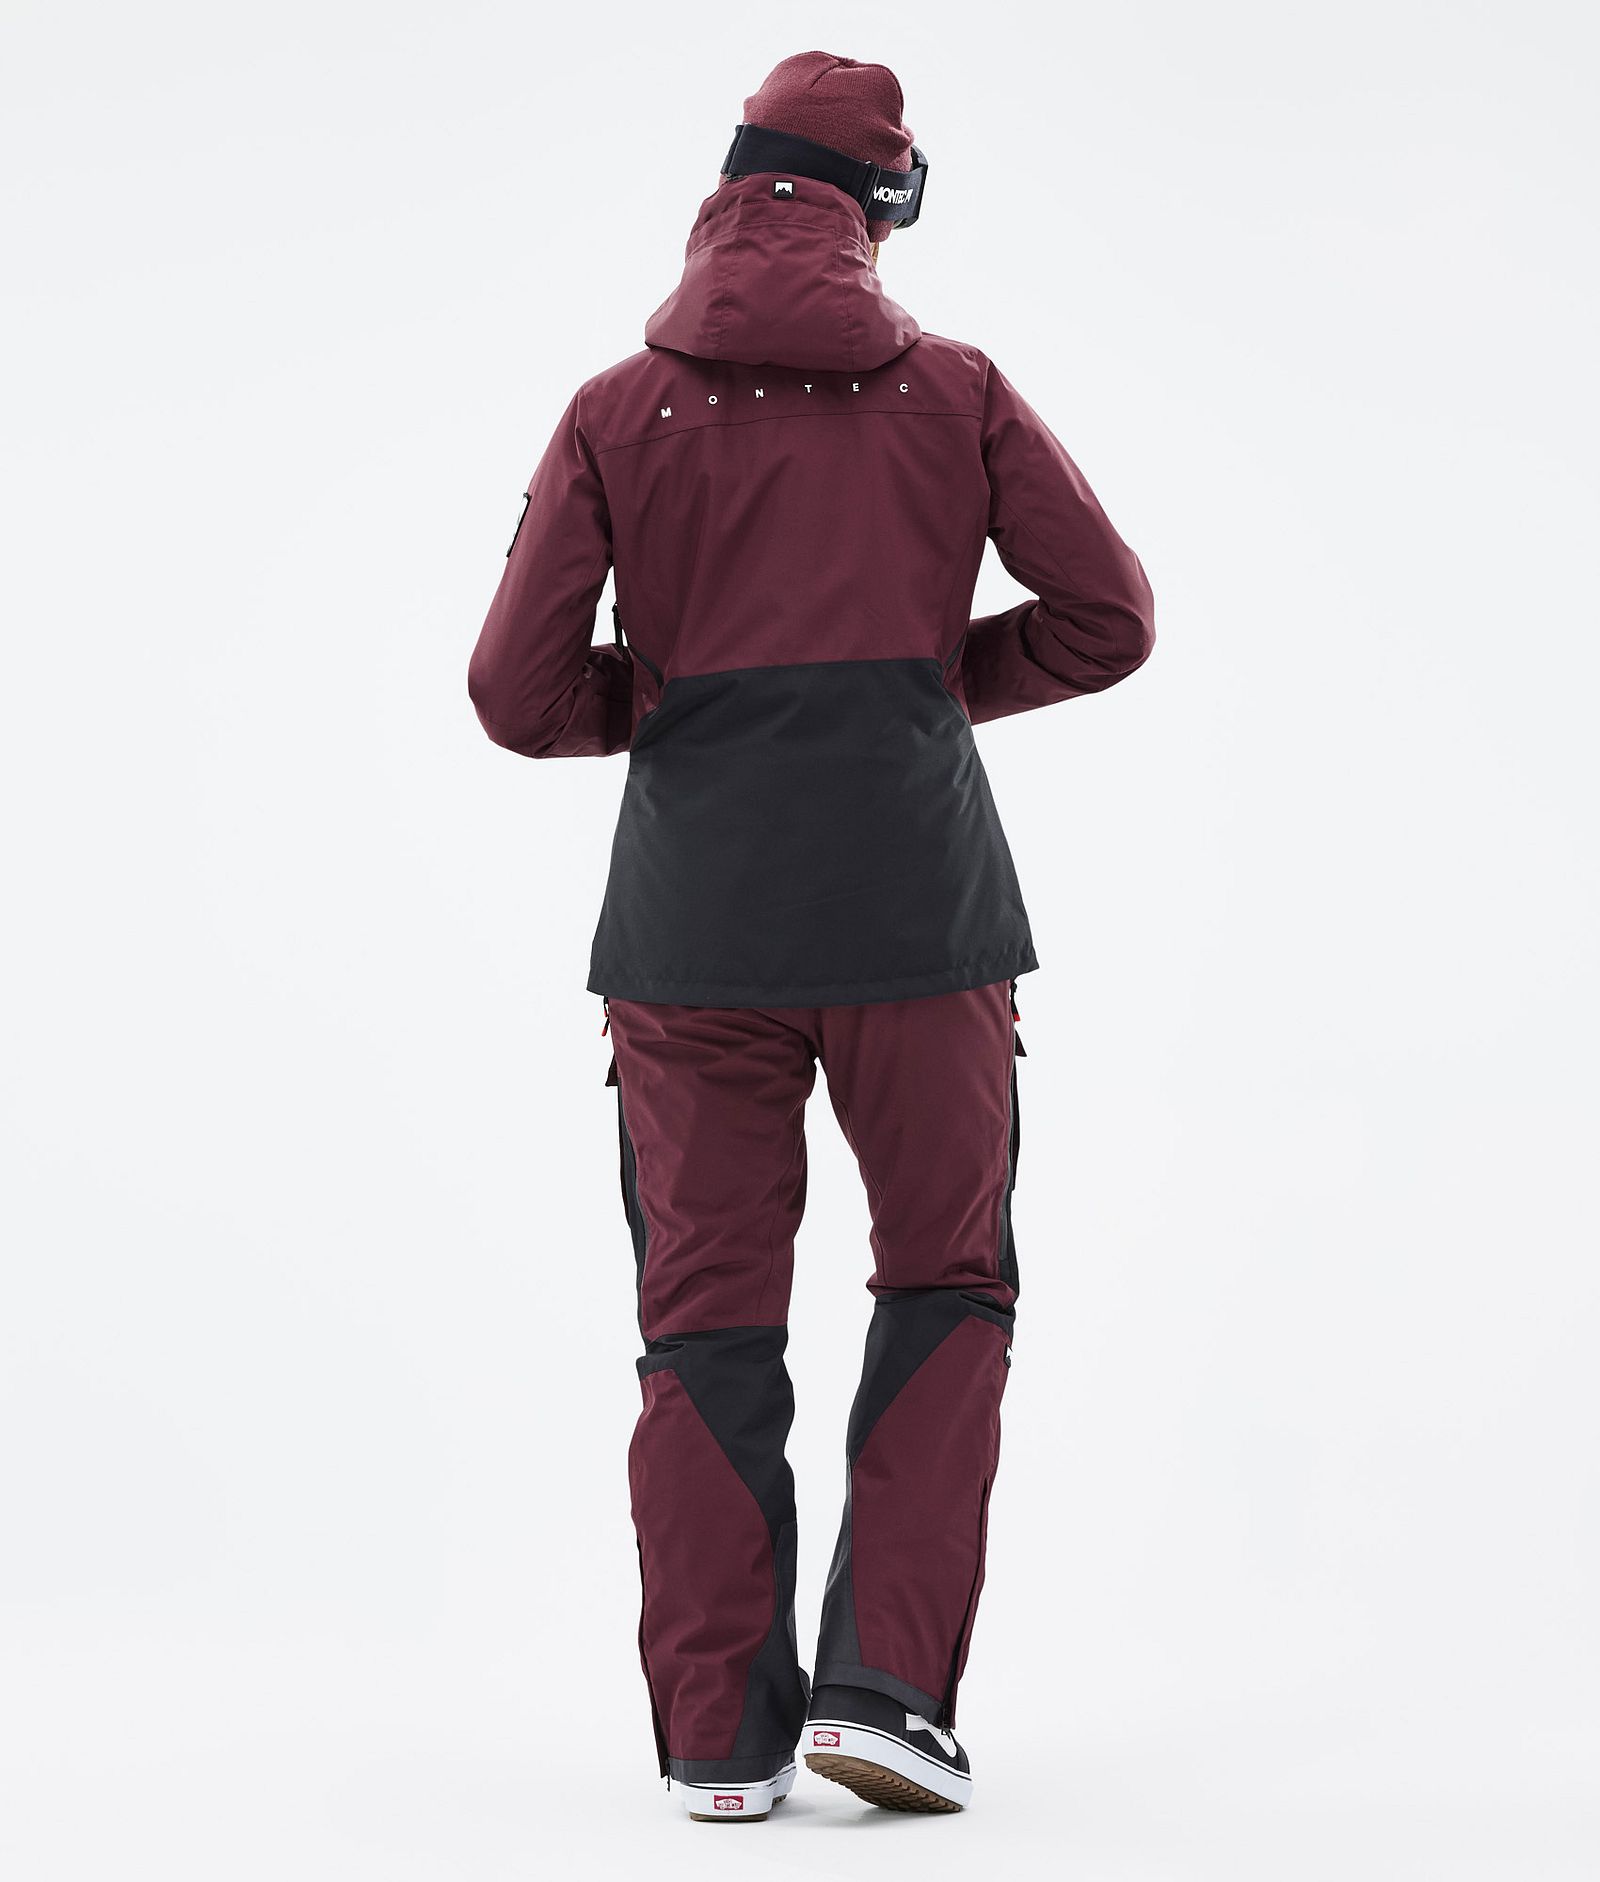 Moss W Snowboardový Outfit Dámské Burgundy/Black